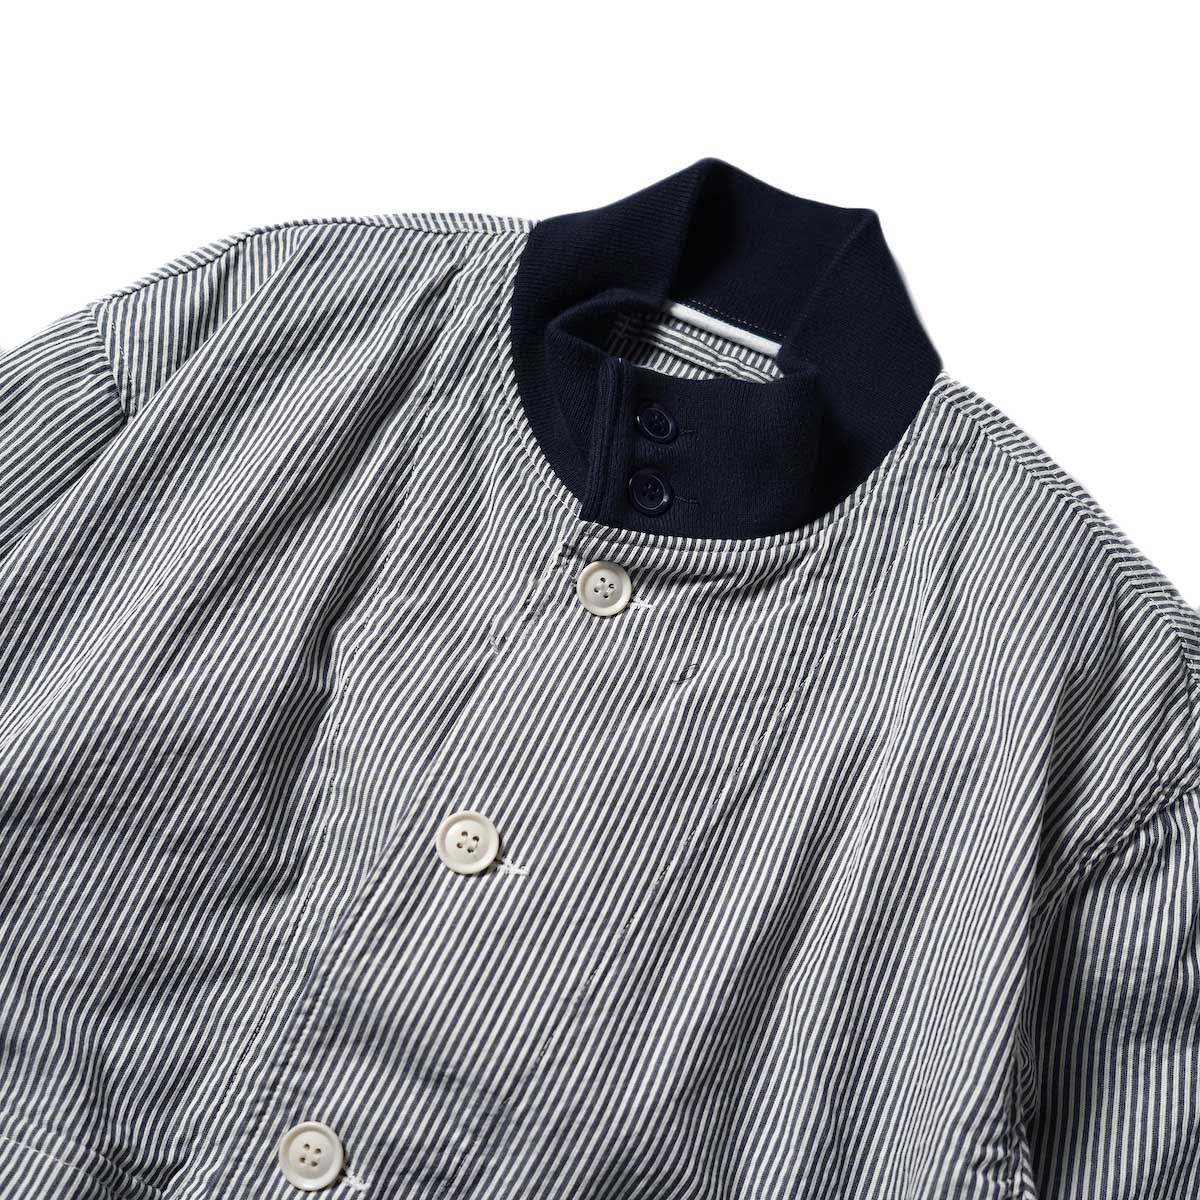 Engineered Garments / A-1 Jacket - Seersucker Stripe襟